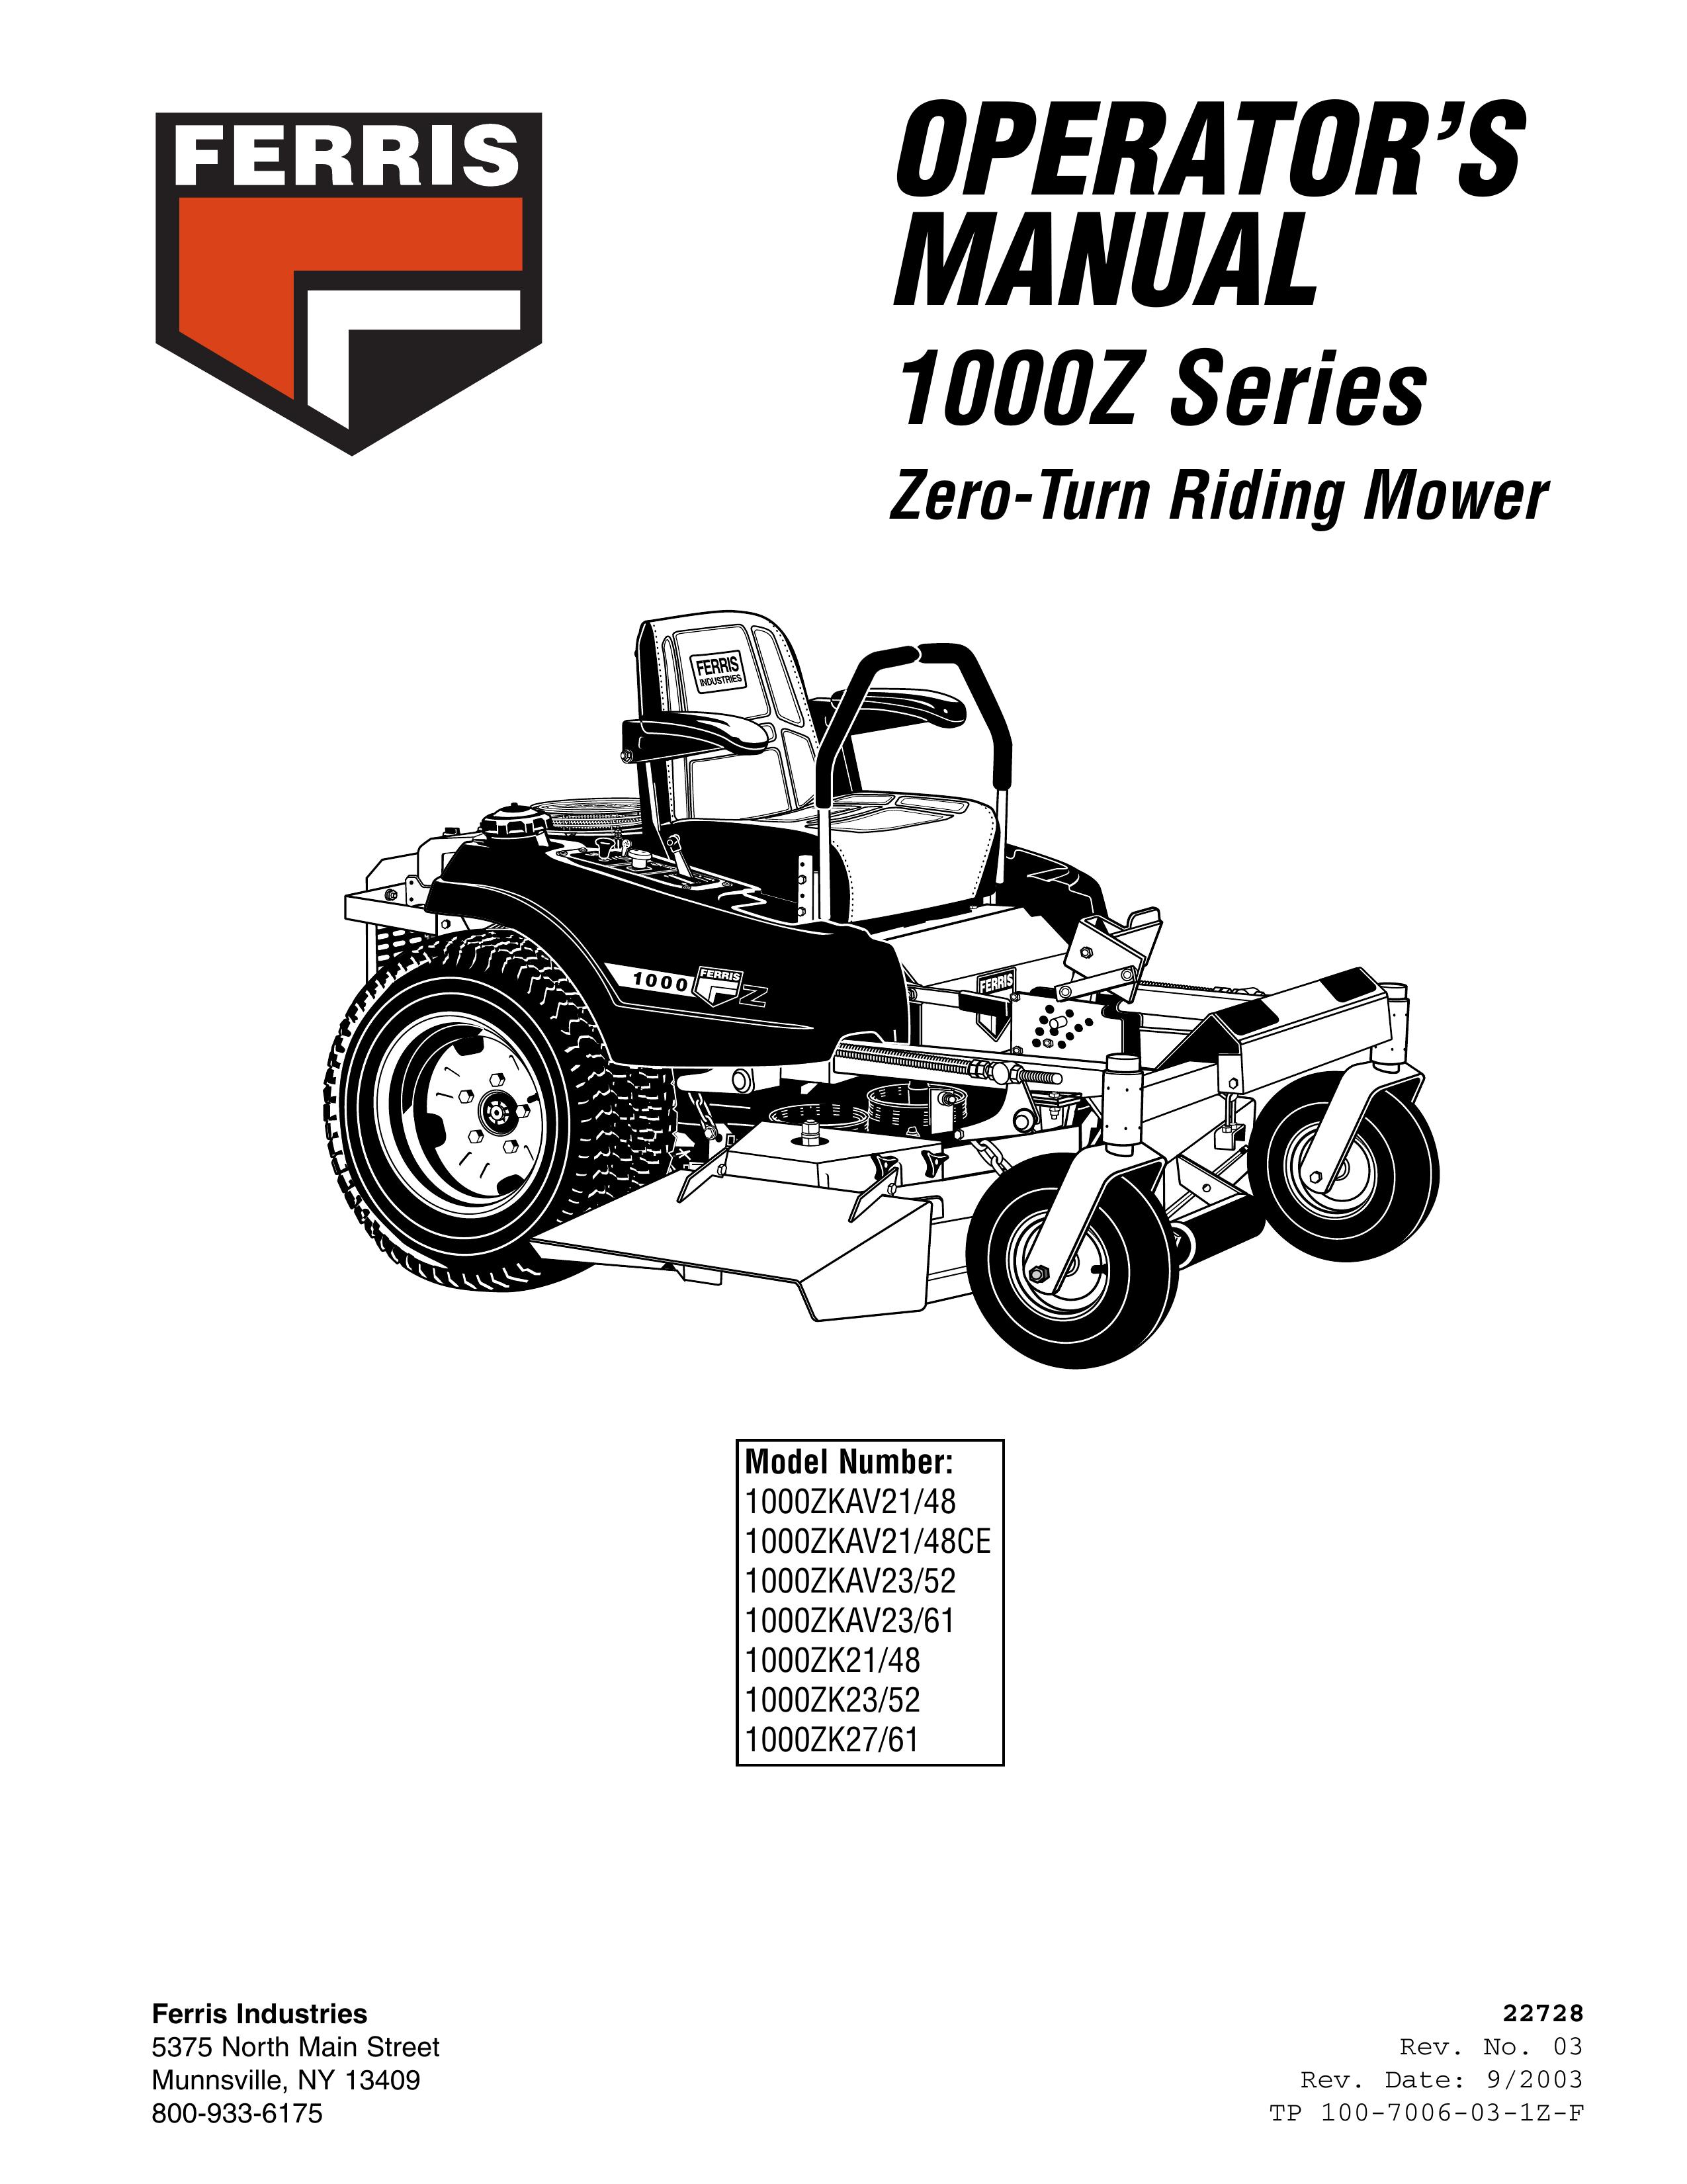 Ferris Industries 1000ZK21/48 Lawn Mower User Manual